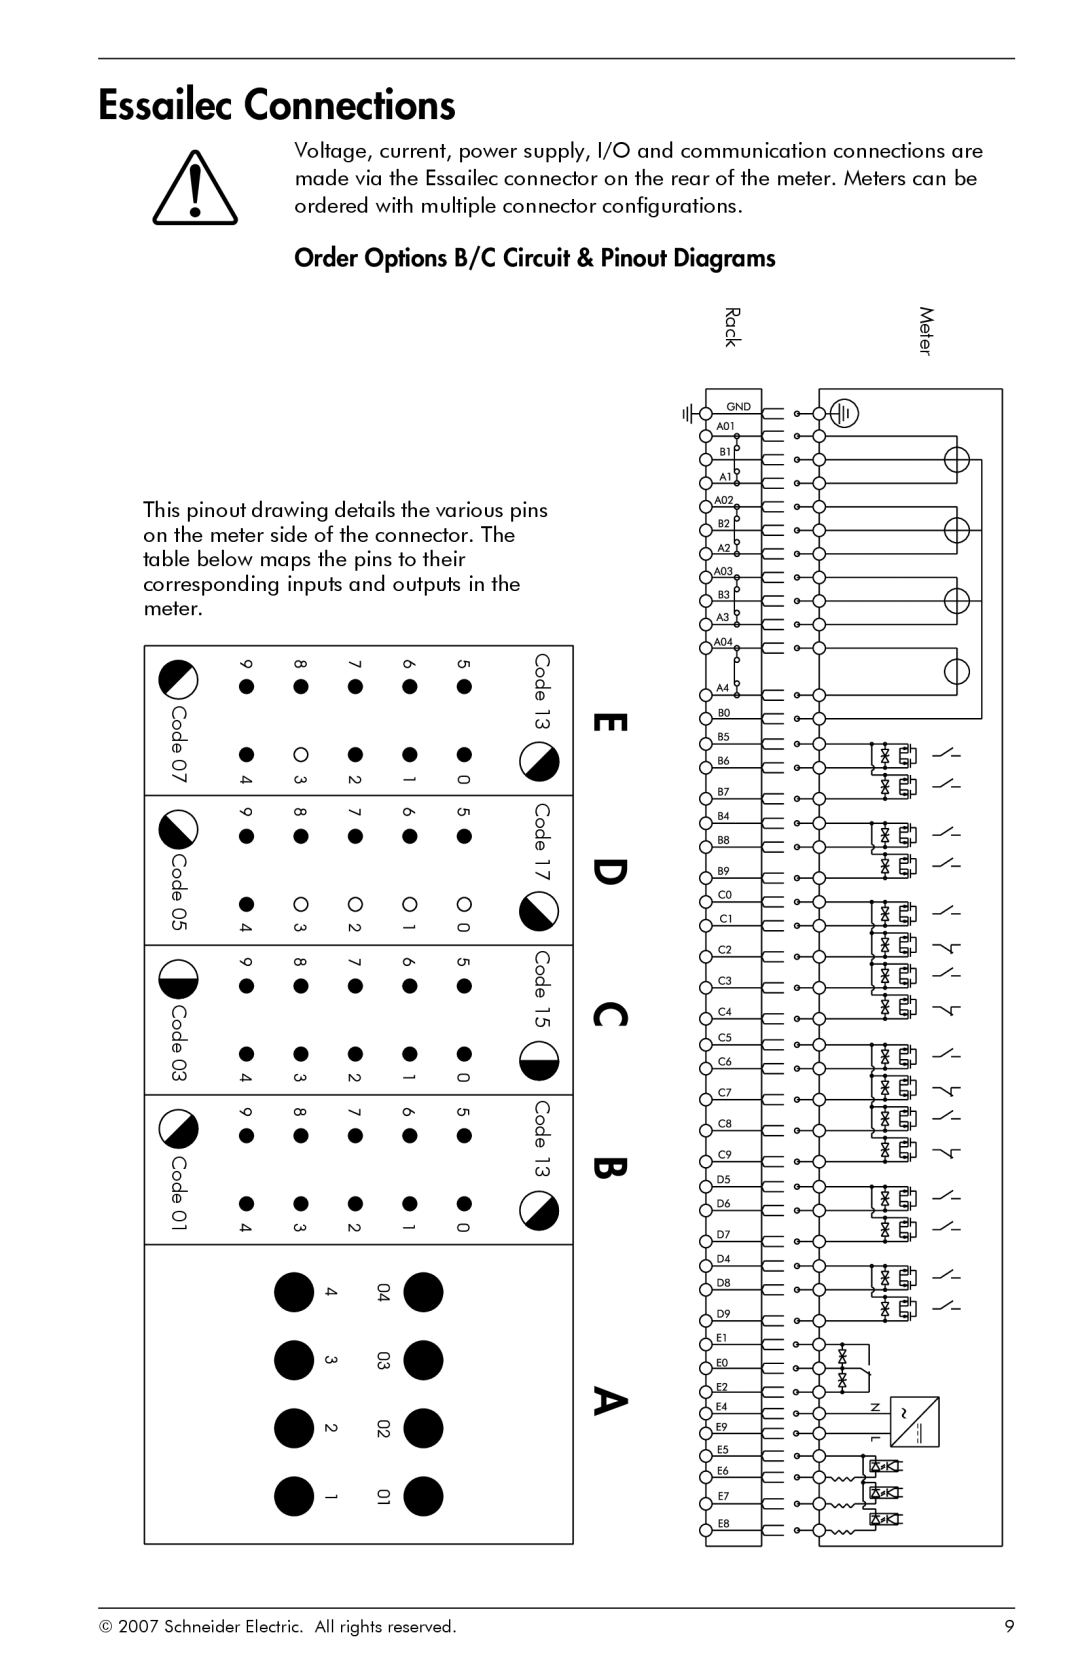 Schneider Electric ION8800 manual E D C B, Essailec Connections, Order Options B/C Circuit & Pinout Diagrams 